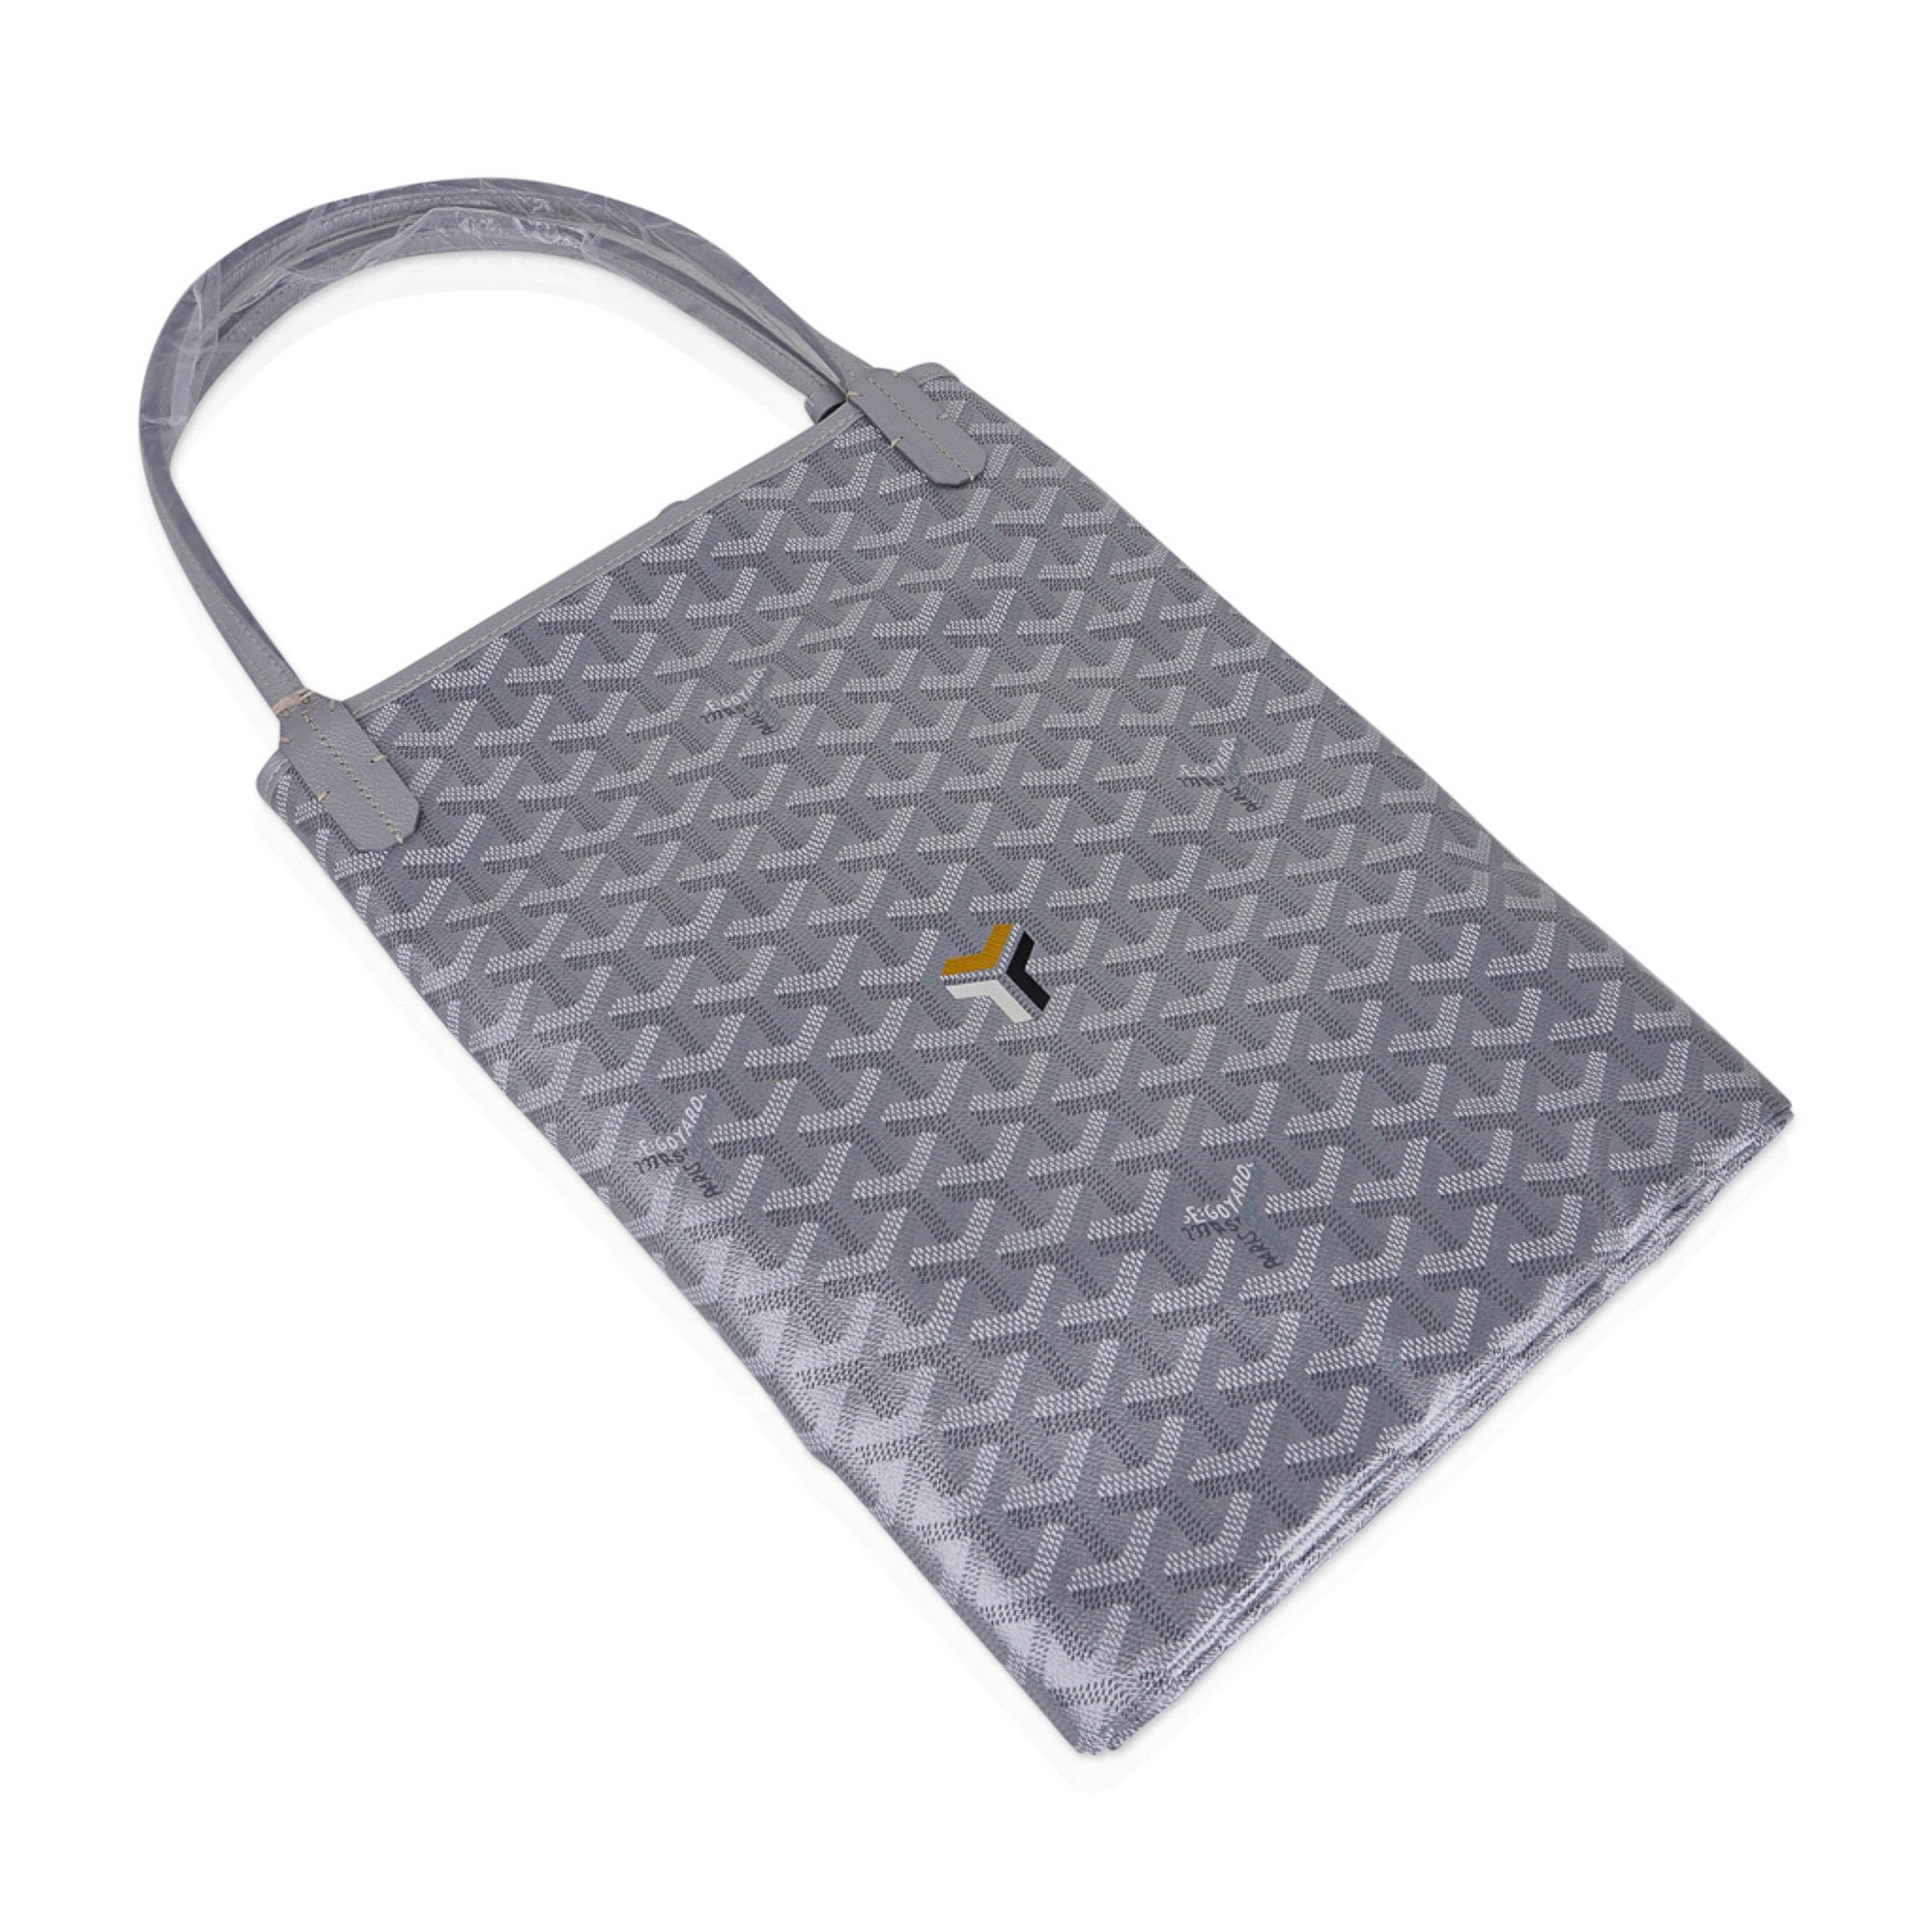 Beautiful New Silver Metallic GOYARD Croisseier 35 Bag With Lock/key $3900